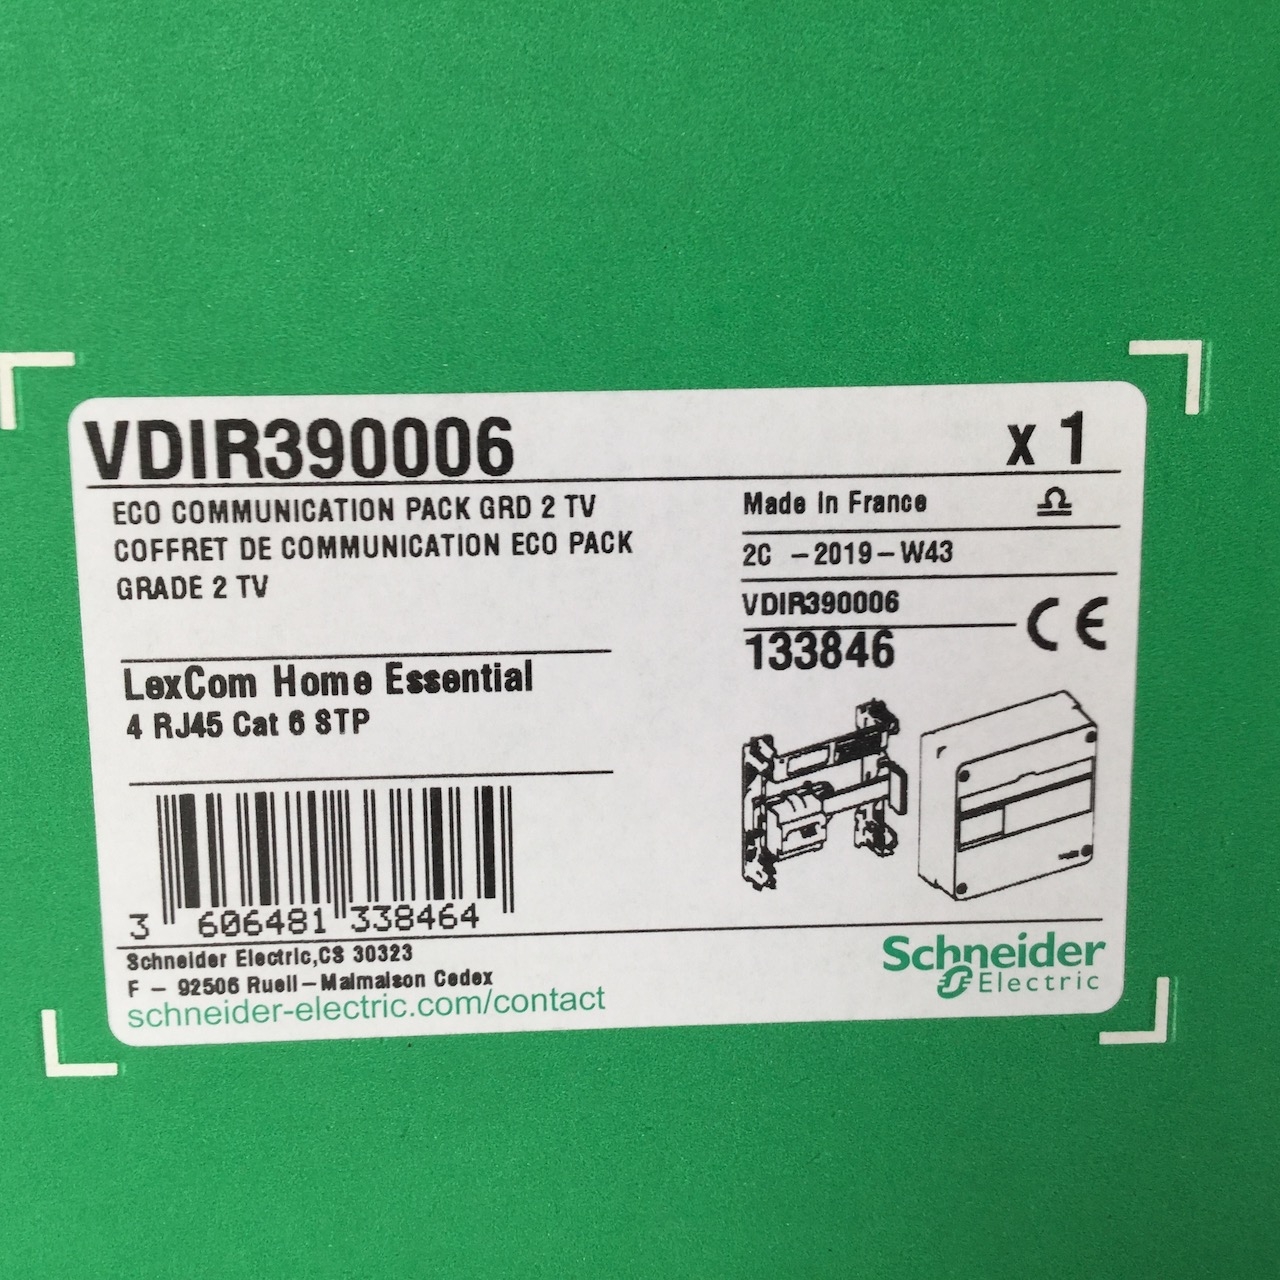 Schneider Electric VDIR390006 ECO Communication Pack Grd 2 TV New NFP Sealed